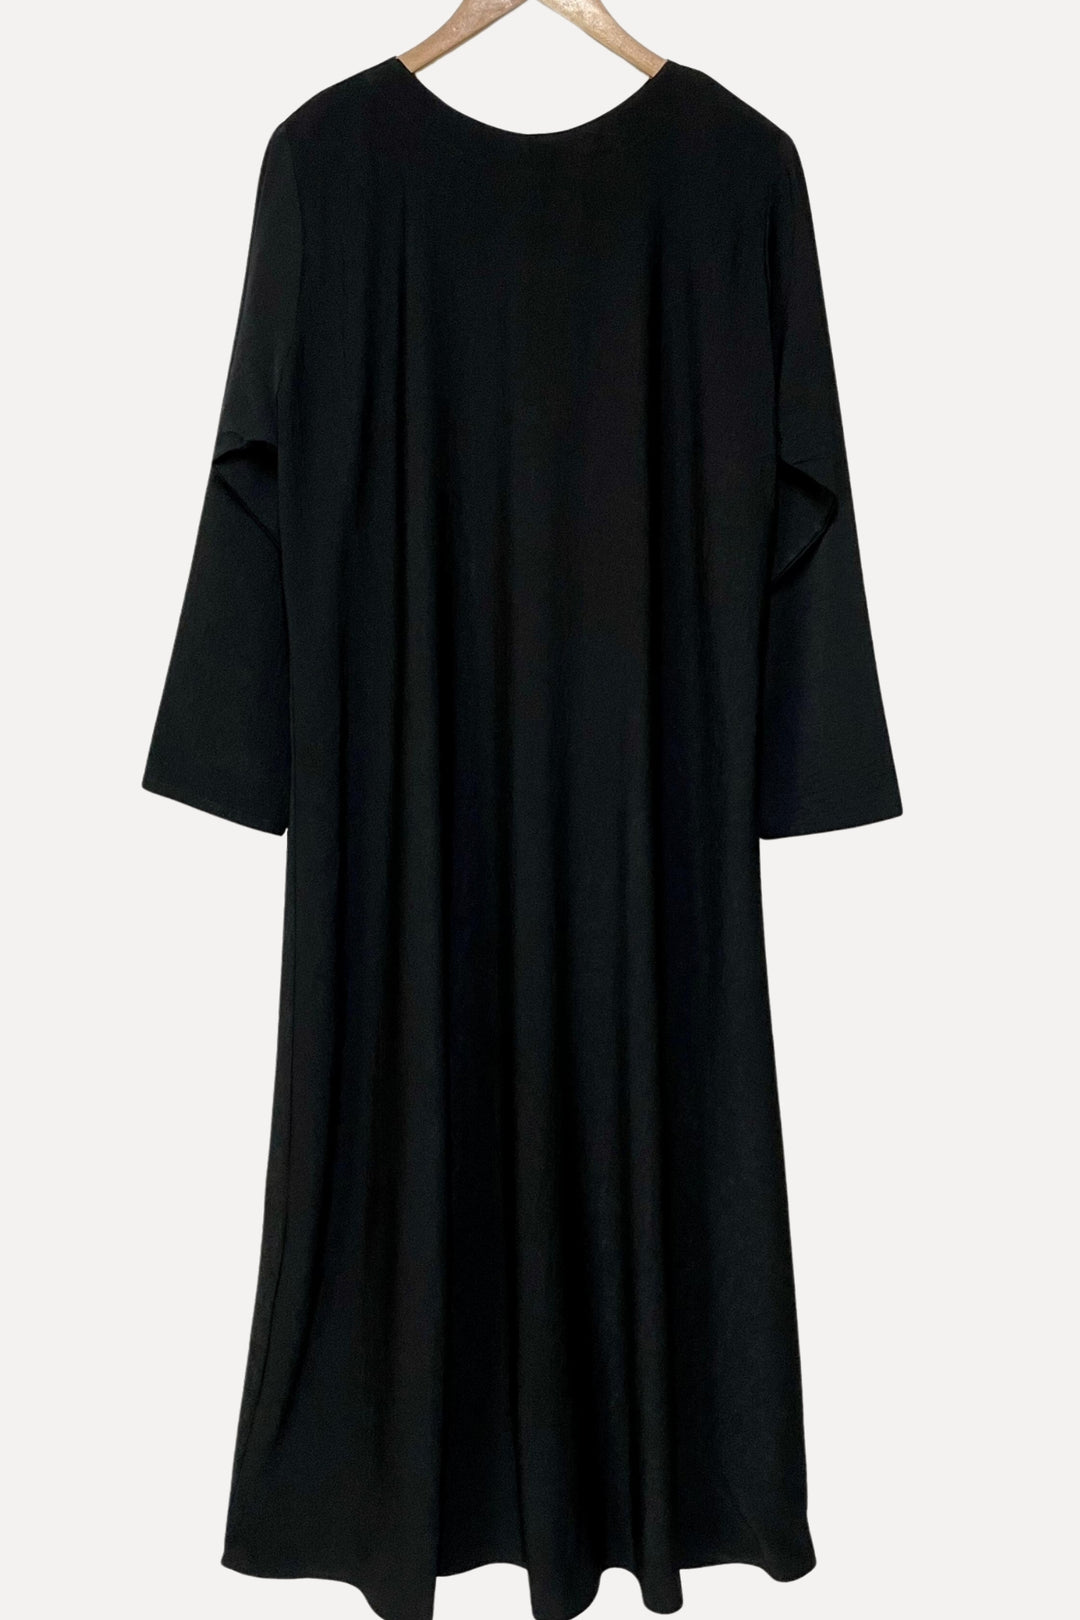 Abaya Inner Black ( With Sleeves )